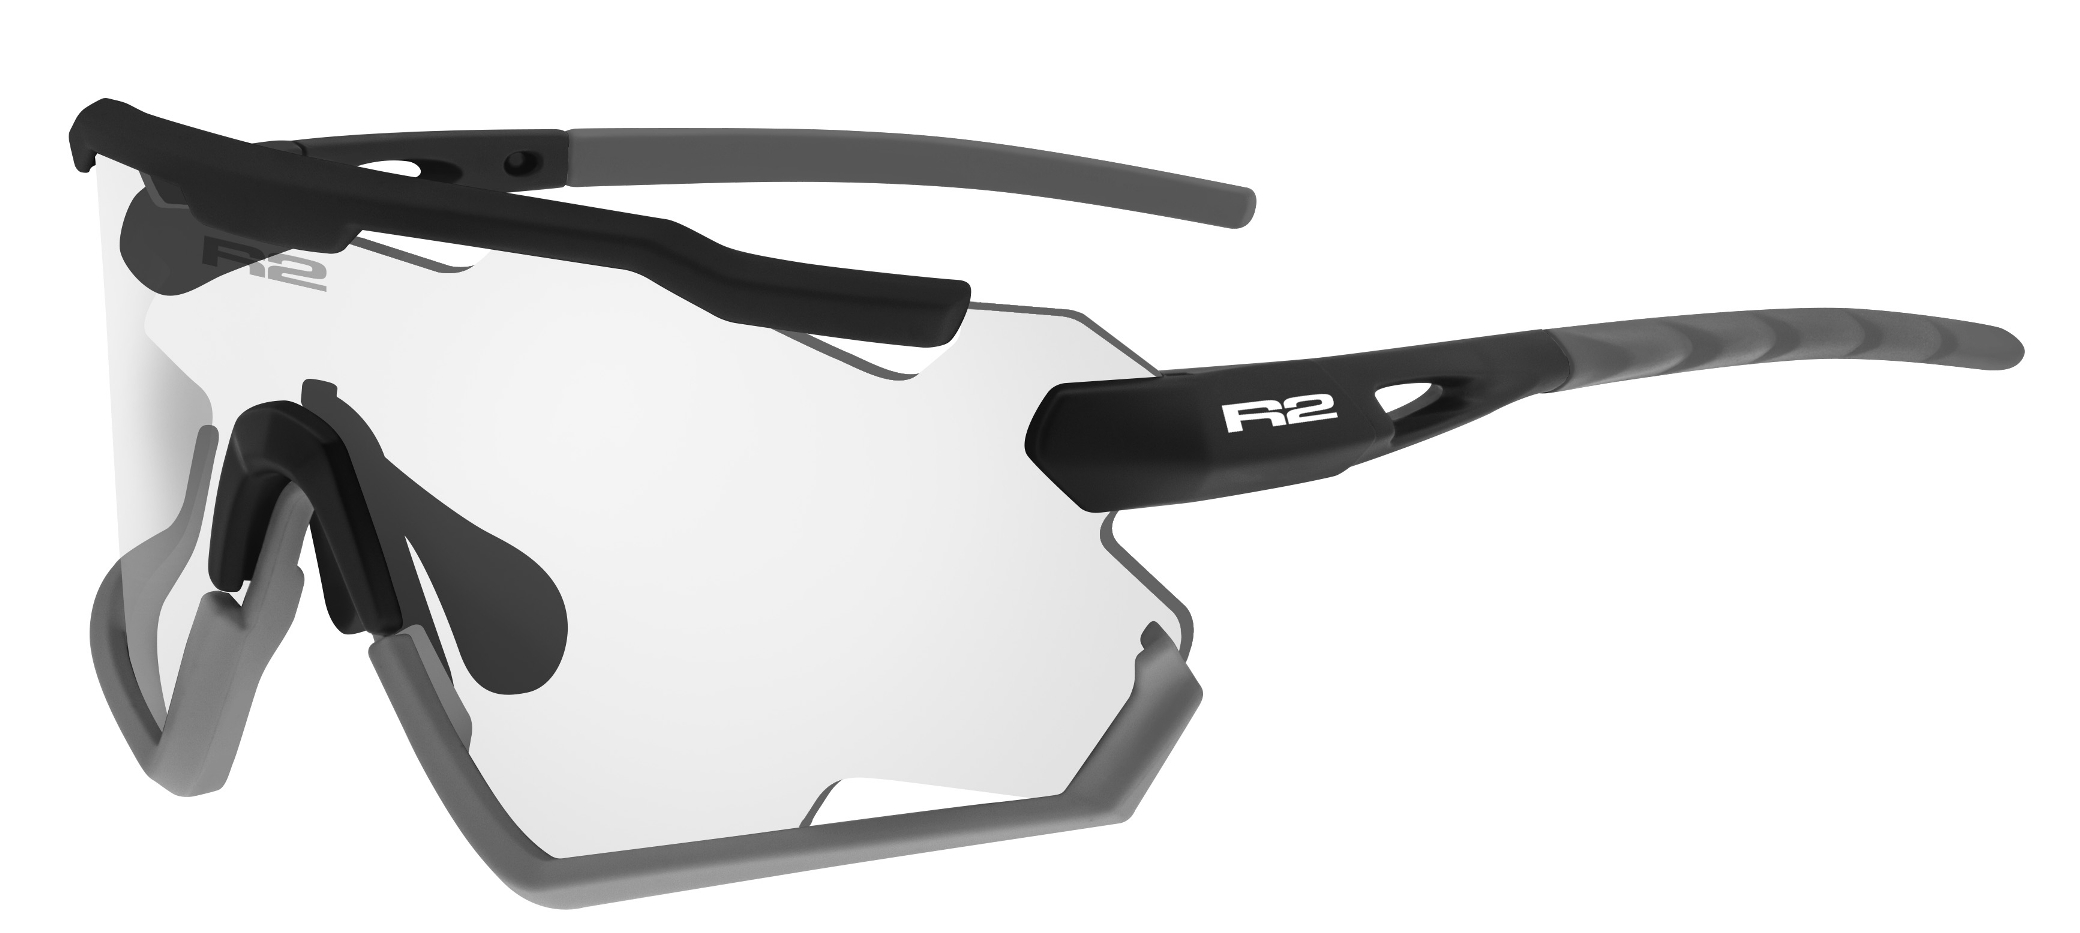 Photochromatic sunglasses R2 DIABLO AT106C standard